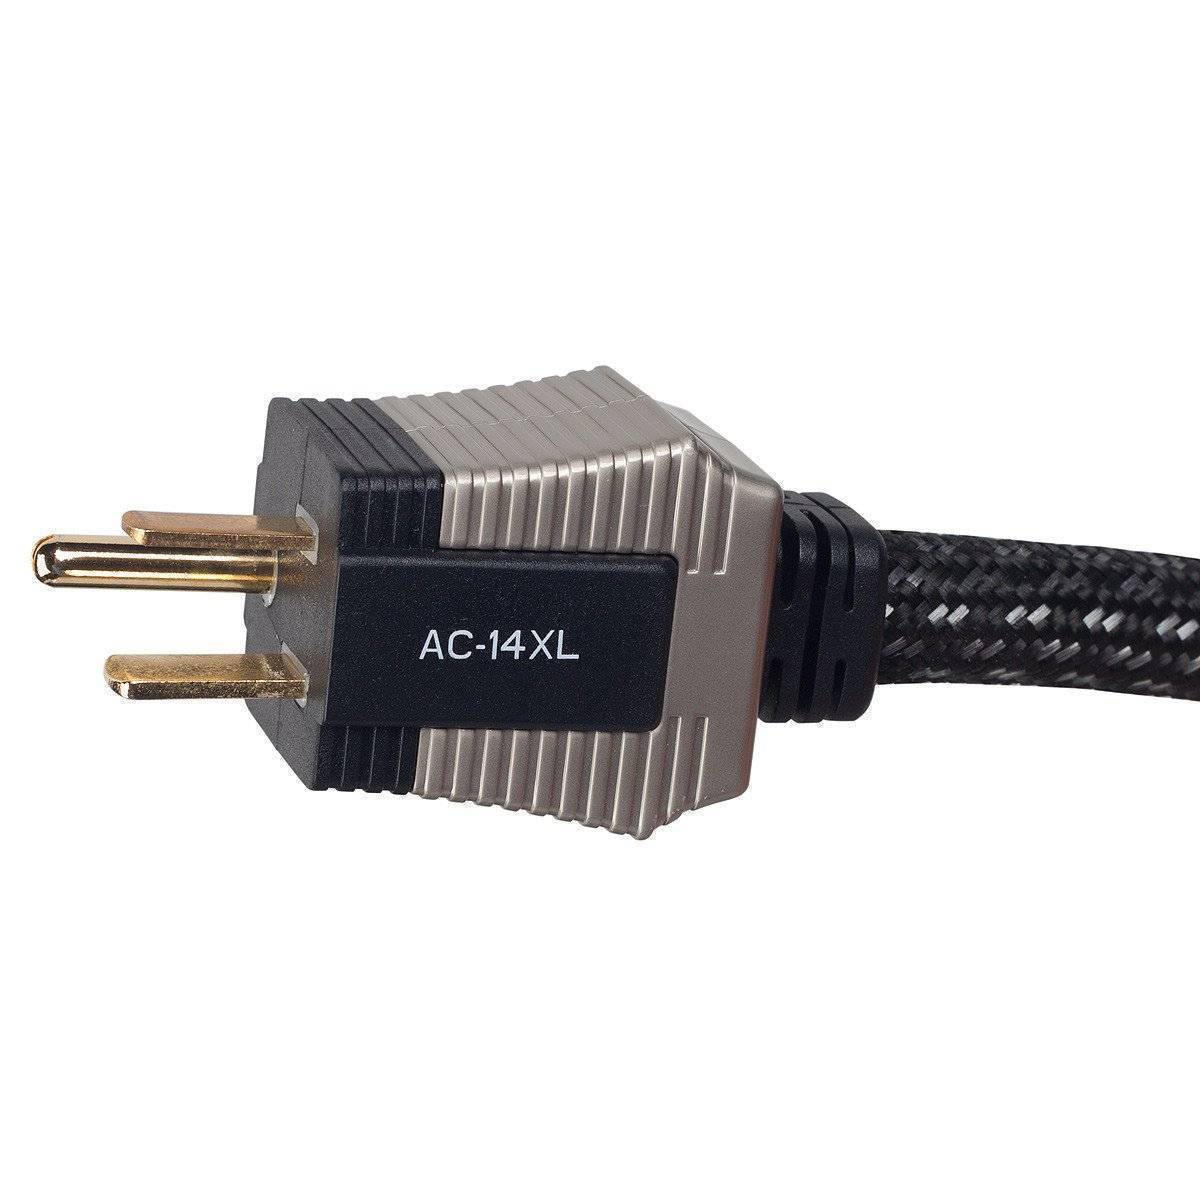 Pangea Audio AC-14XL MK II Reference Power Cord